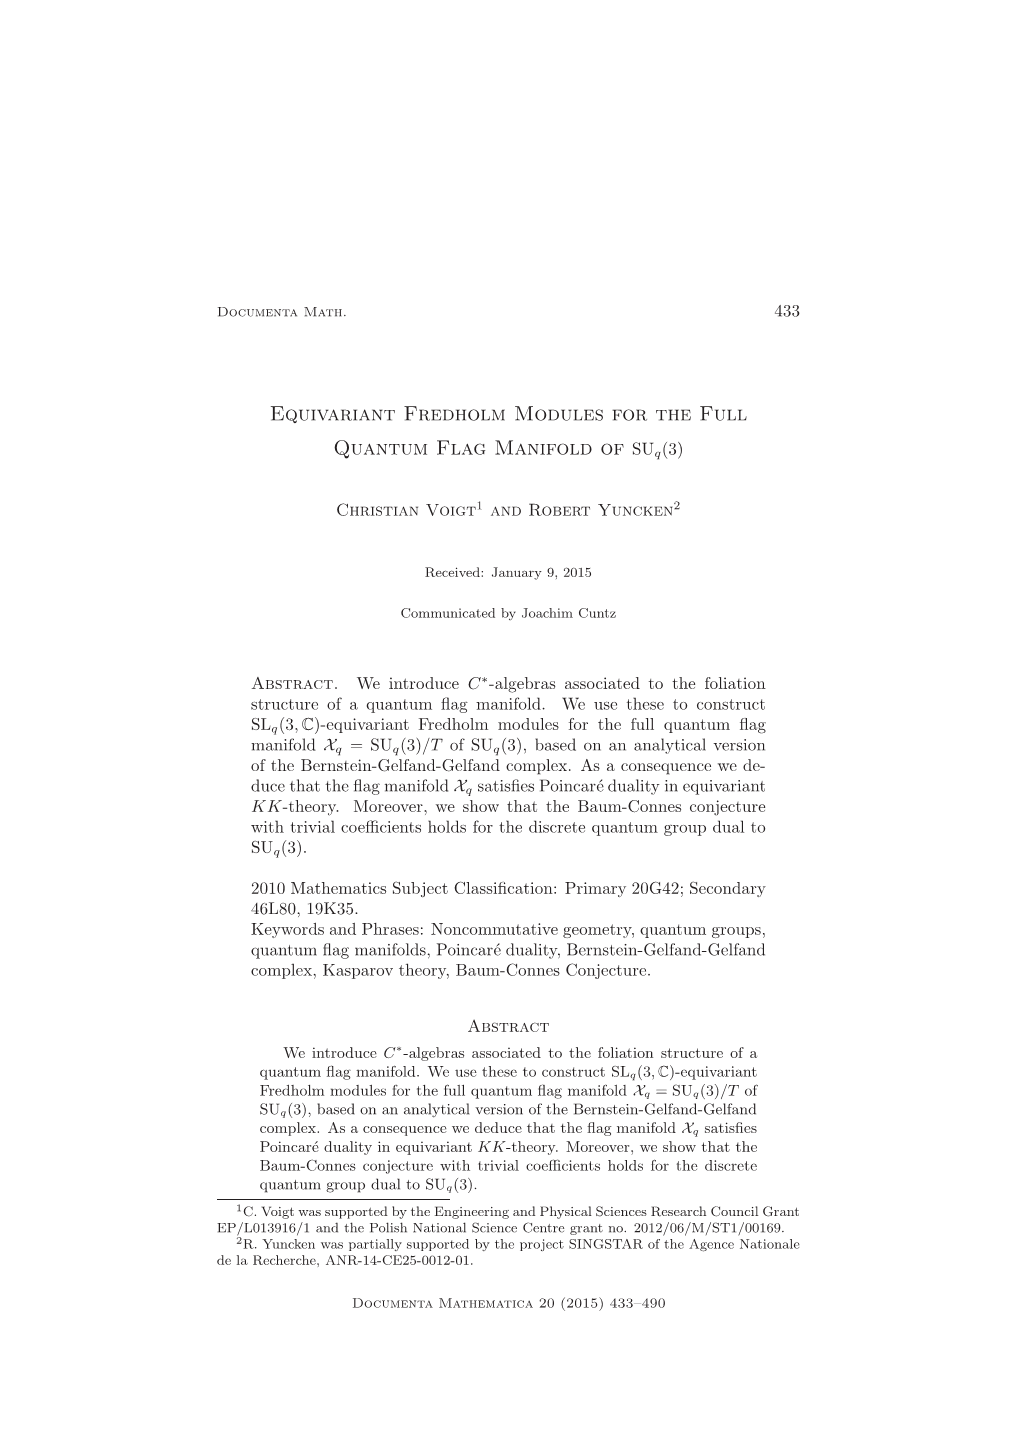 Equivariant Fredholm Modules for the Full Quantum Flag Manifold of Suq(3)